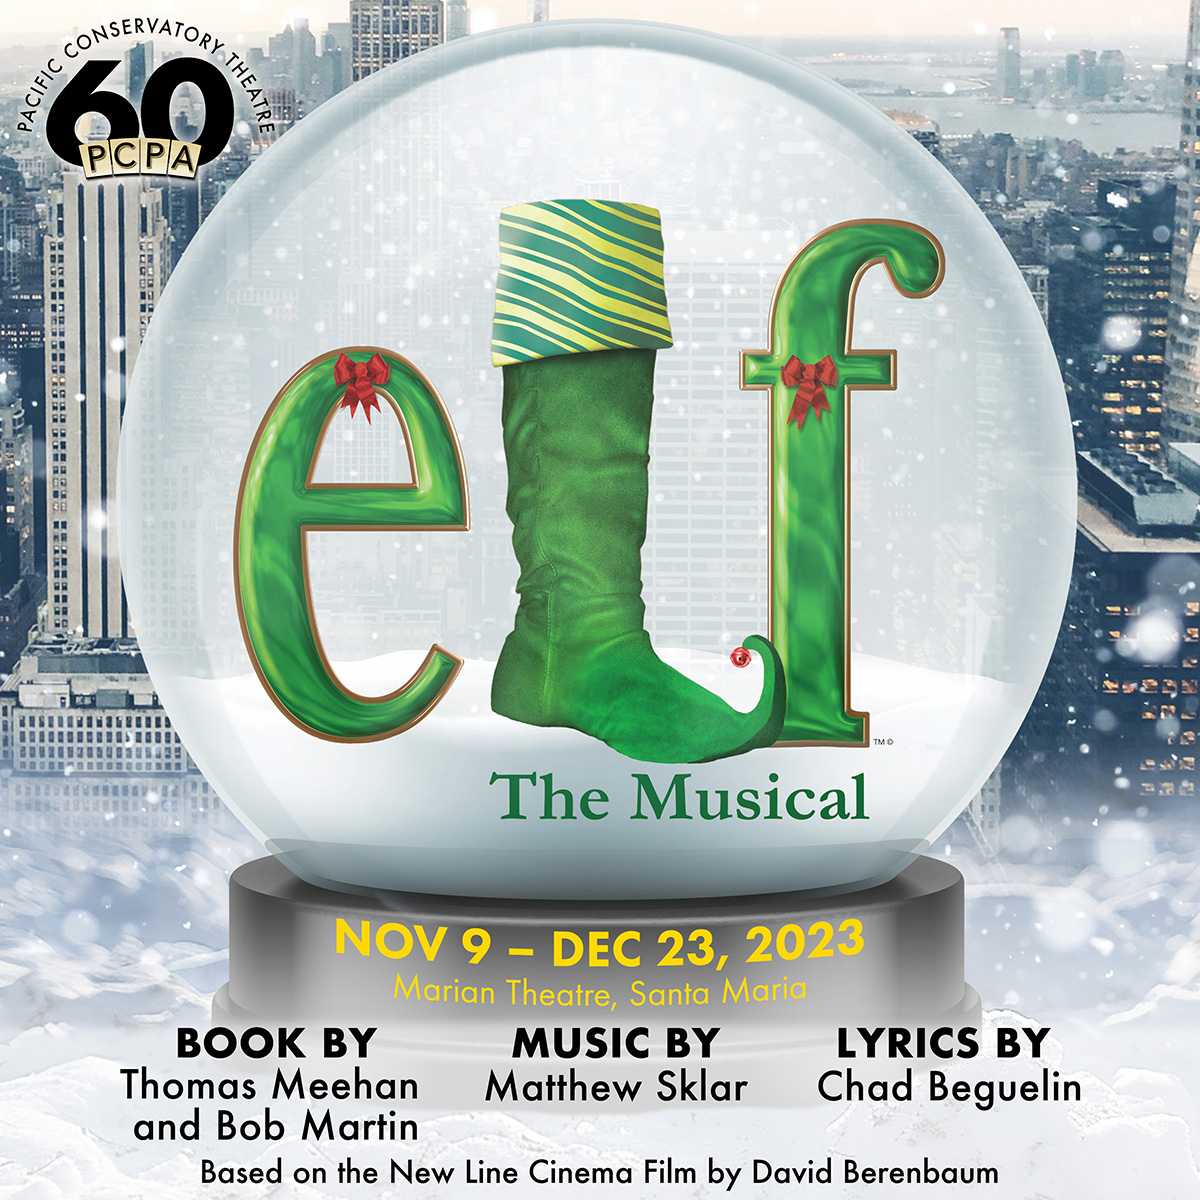 Poster Art for Elf the musical